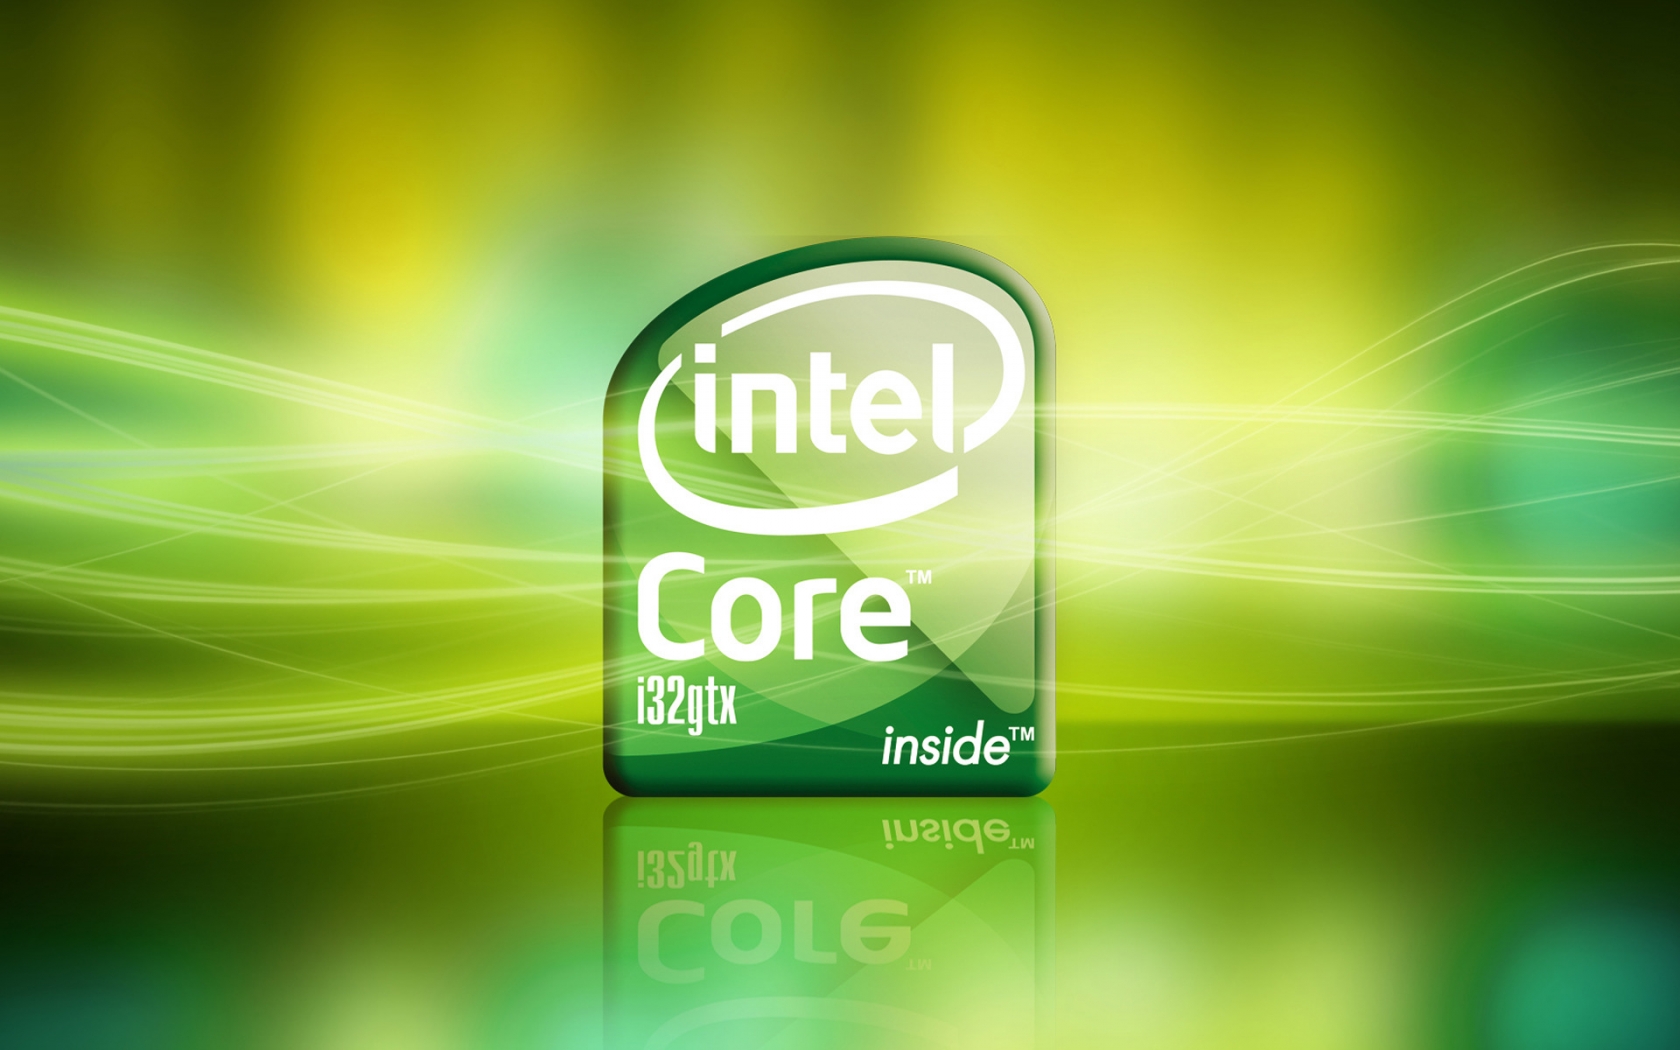 Intel Core i32gtx for 1680 x 1050 widescreen resolution